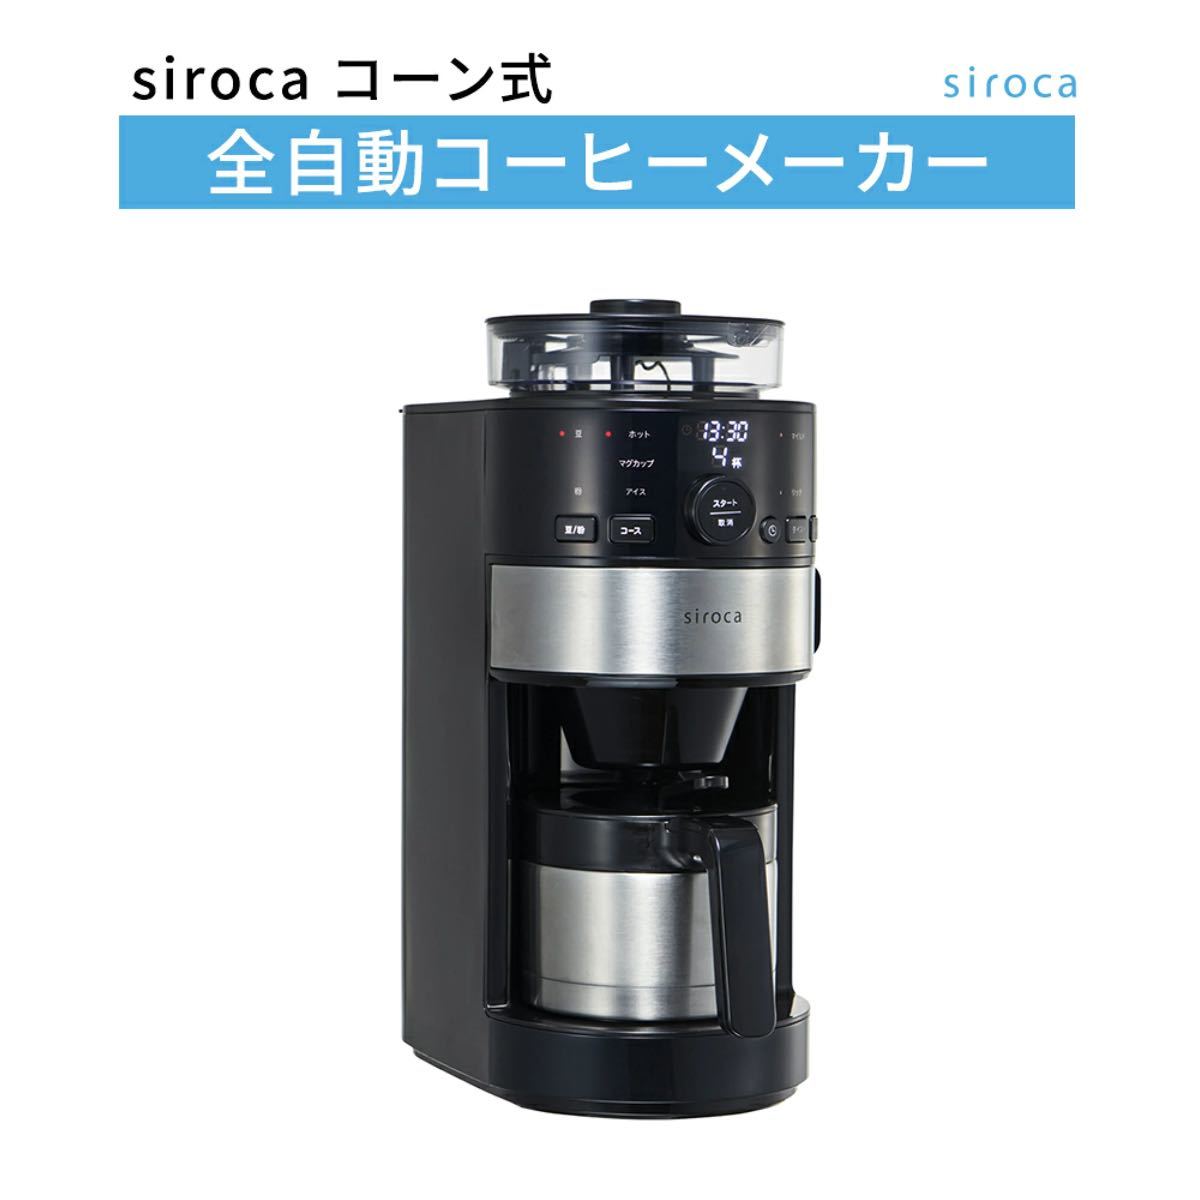 siroca 全自動コーヒーメーカー  シロカ SC-C122 